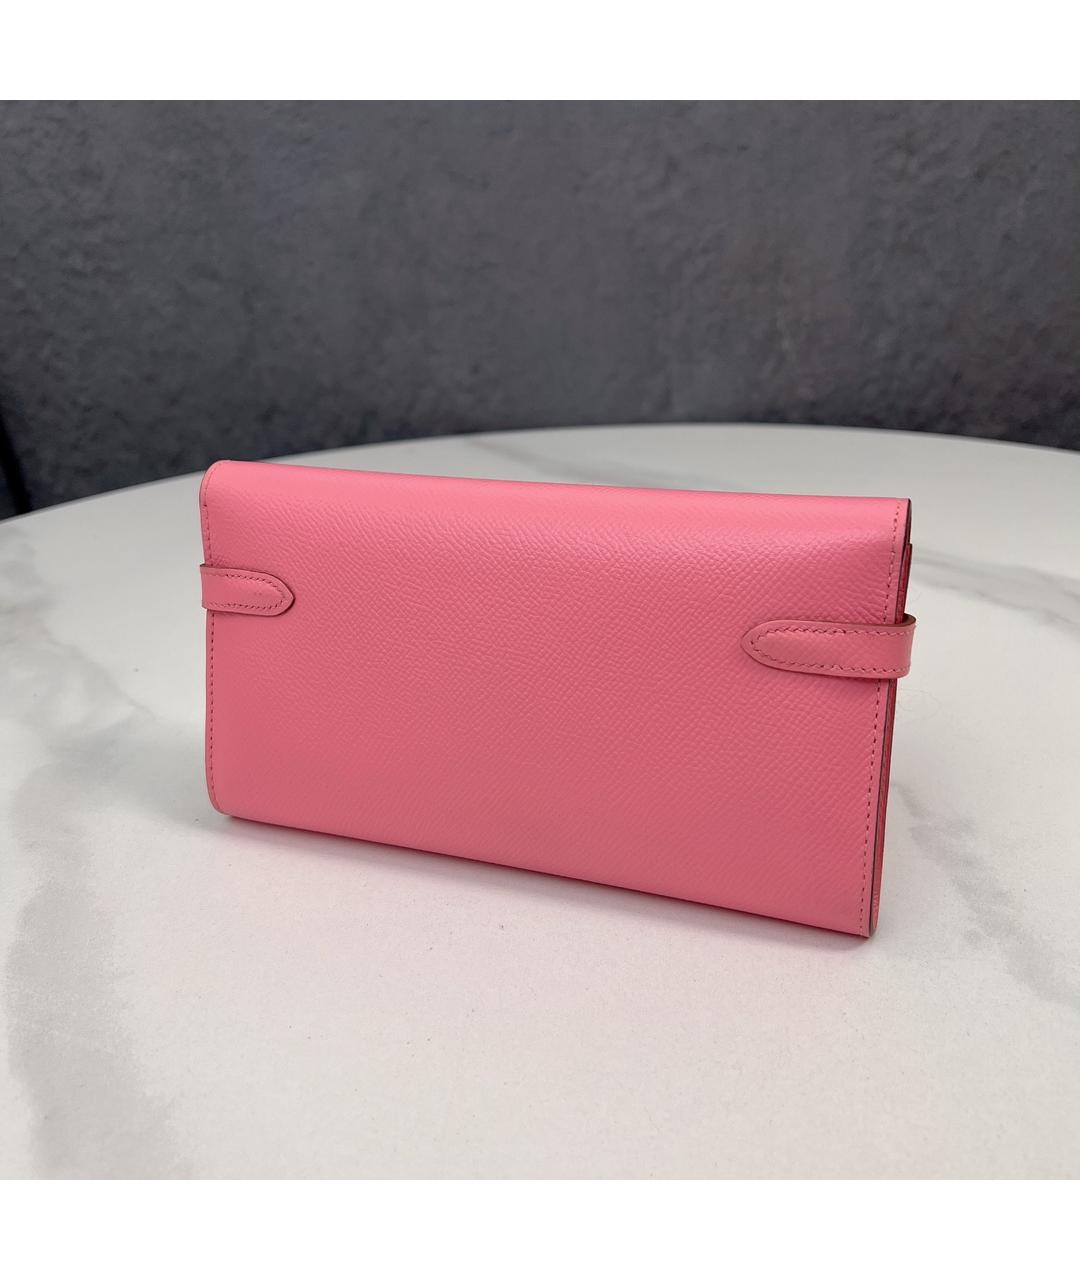 HERMES PRE-OWNED Розовый кожаный кошелек, фото 2